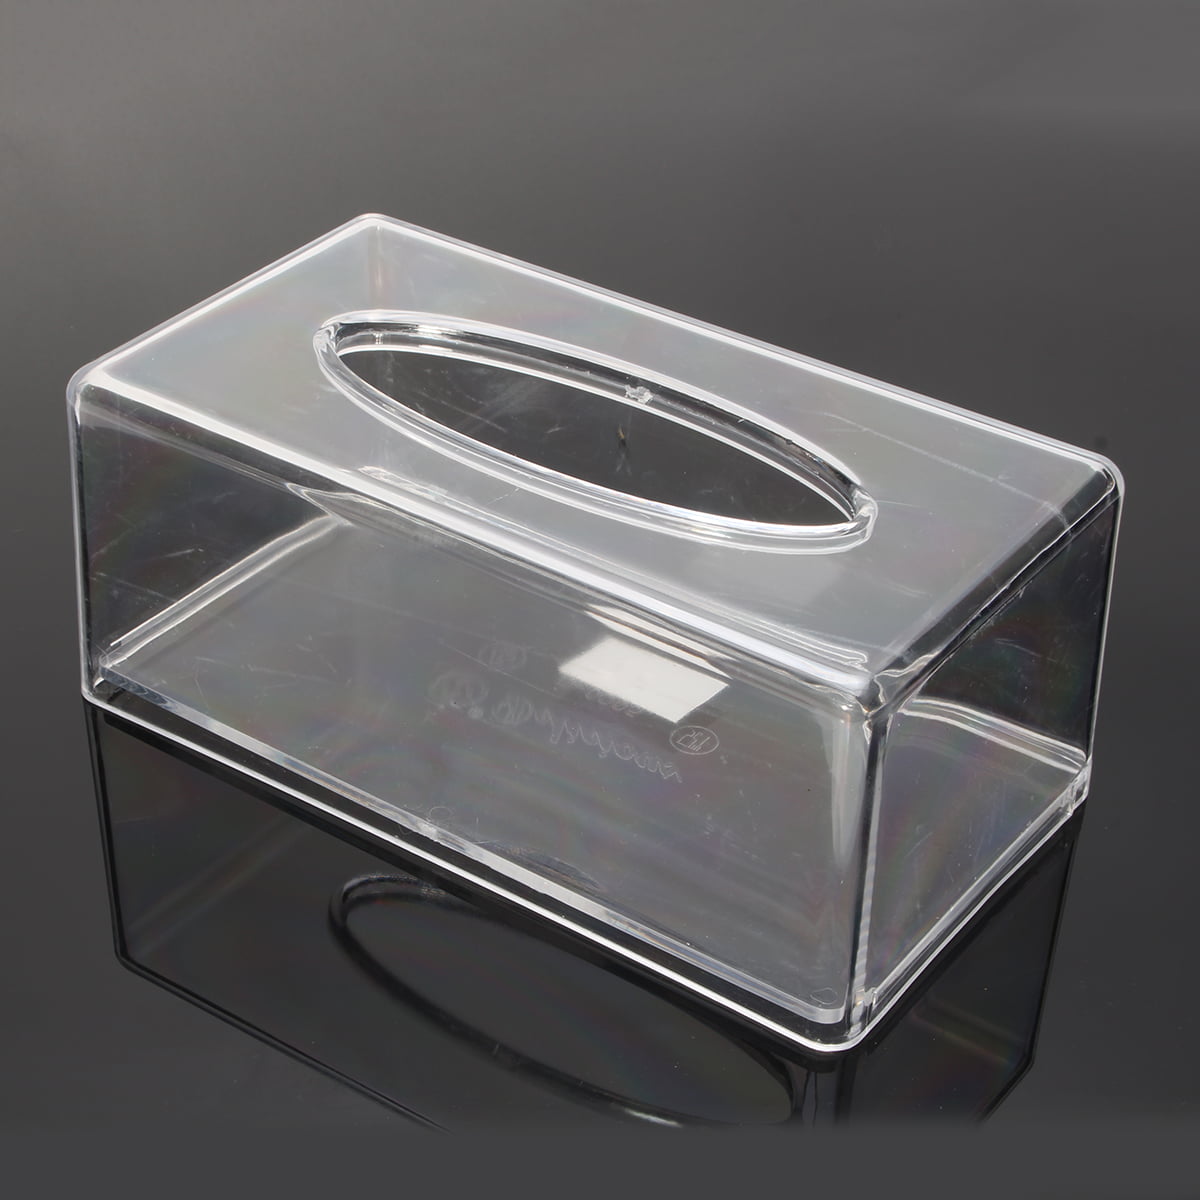 clear plastic tissue box holder